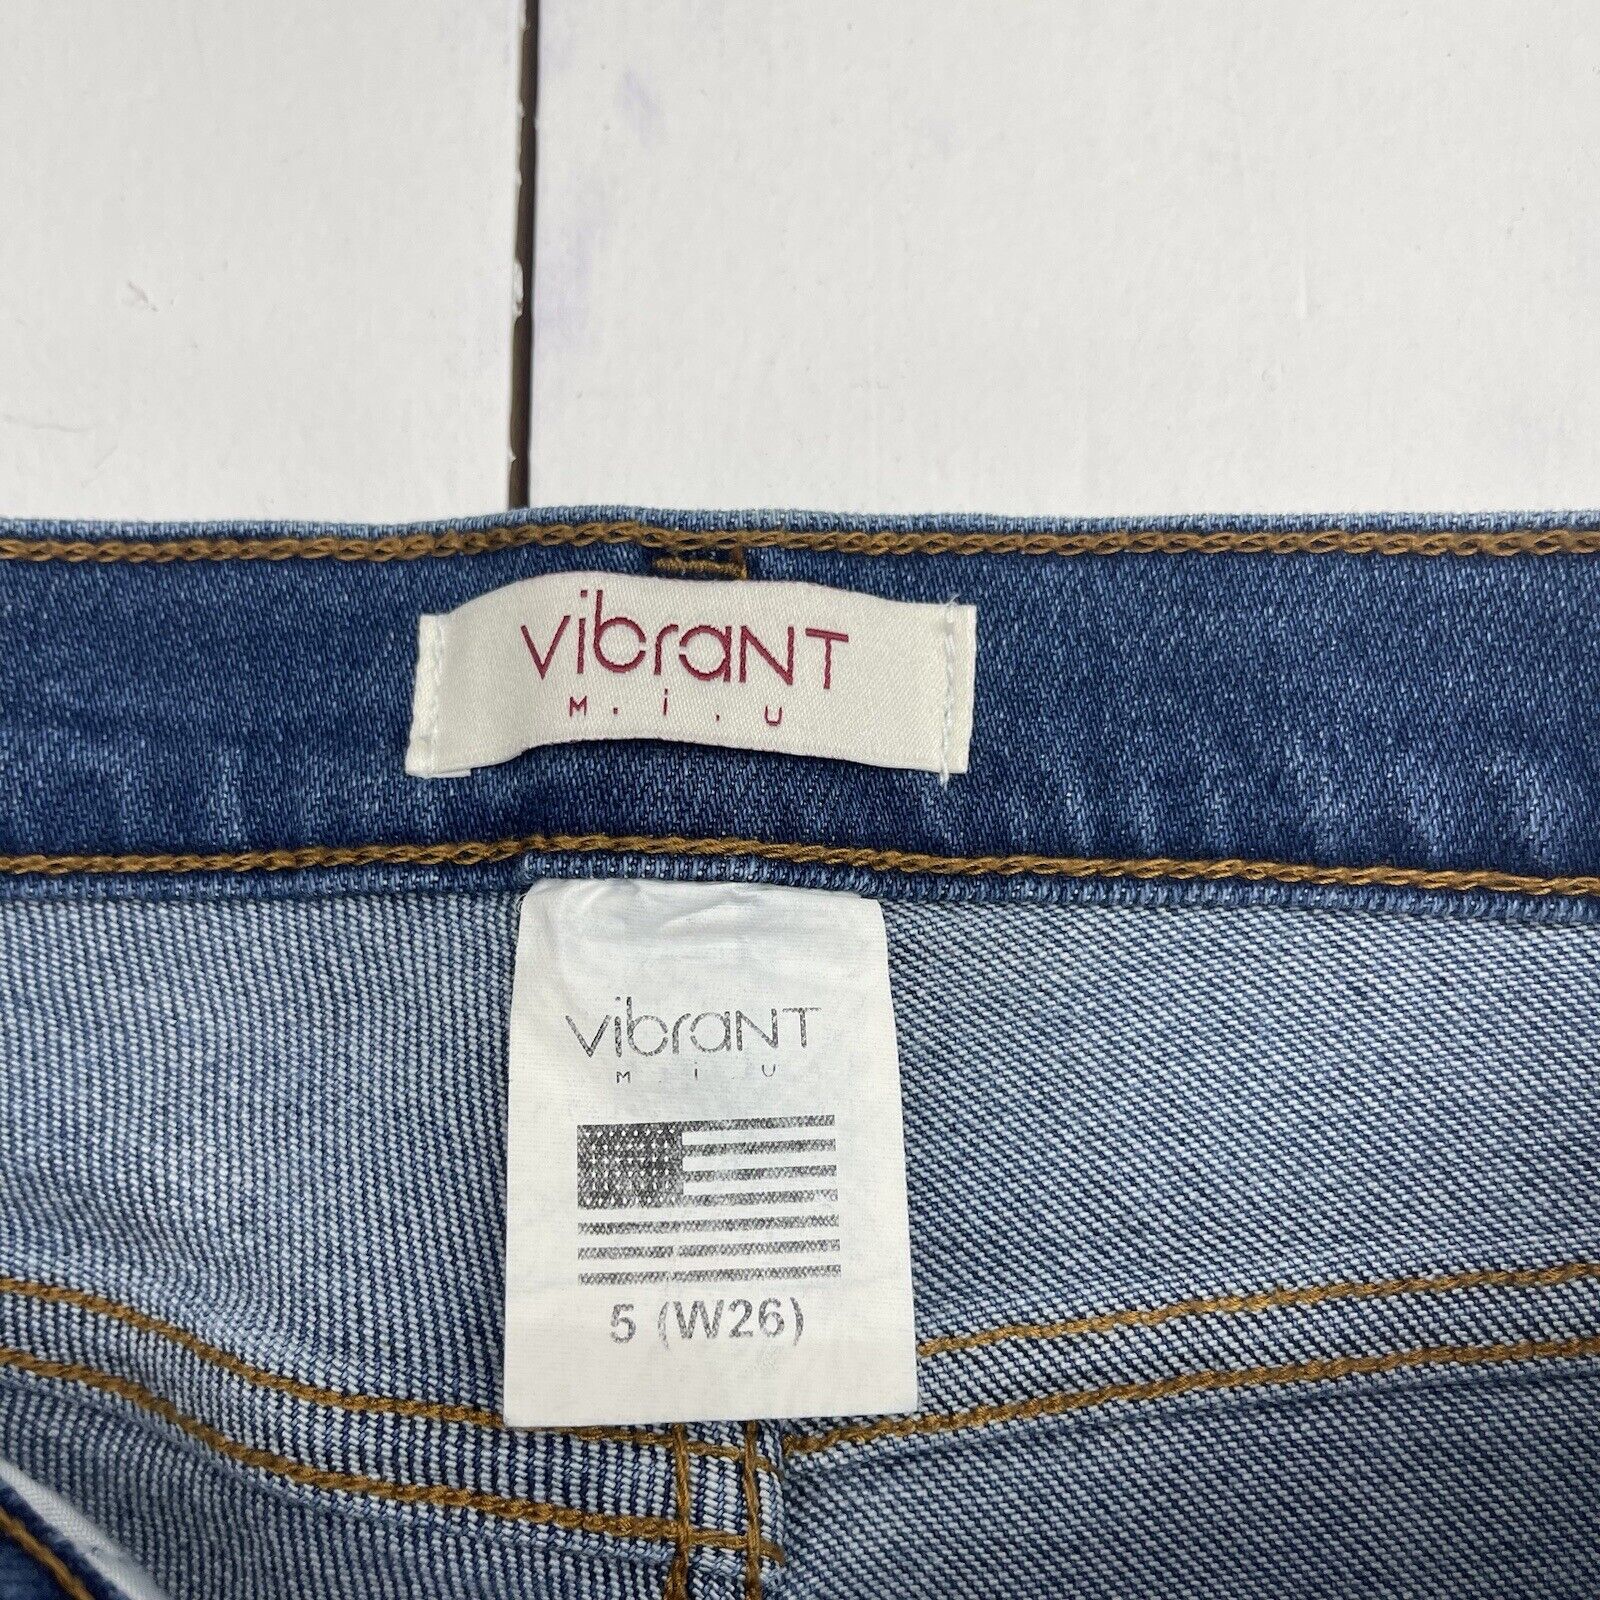 Vibrant Jeans